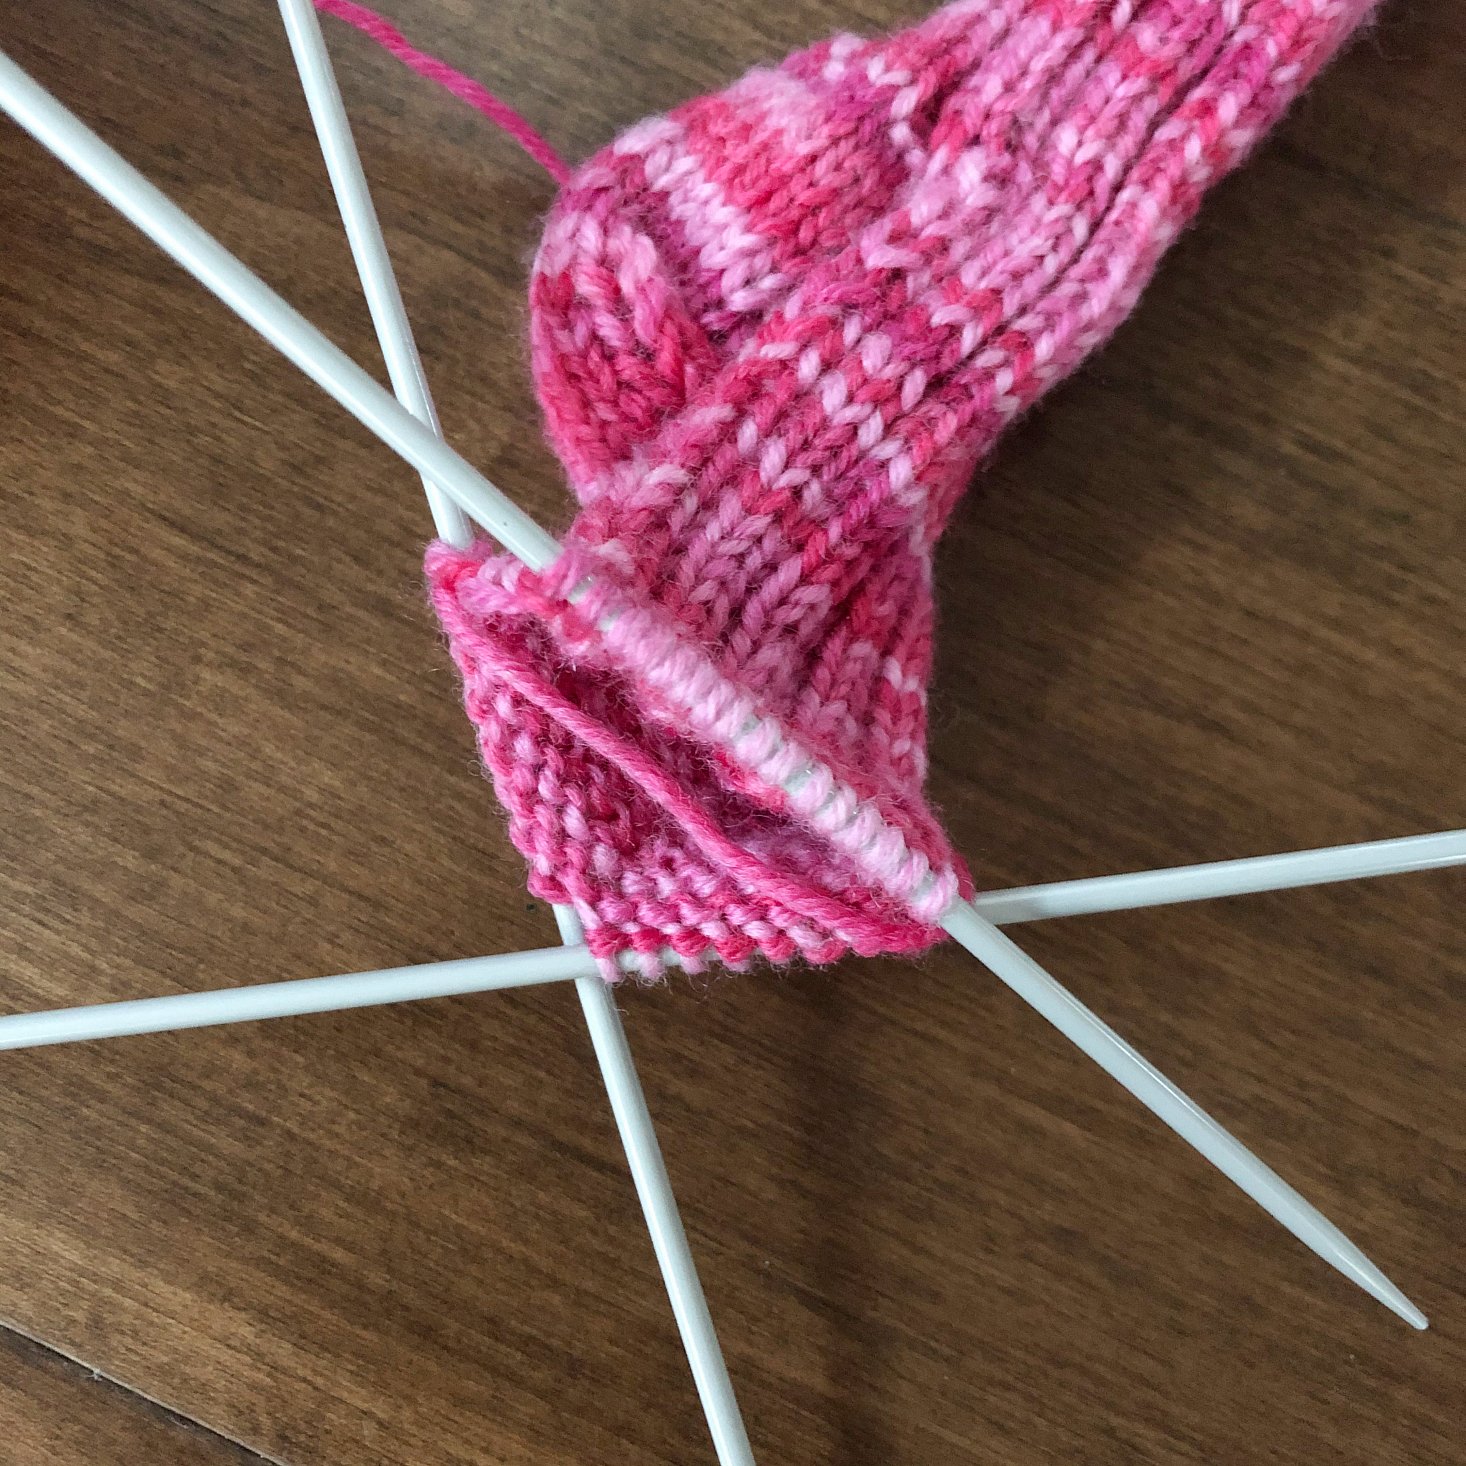 Knit Picks Review October 2019 progress four